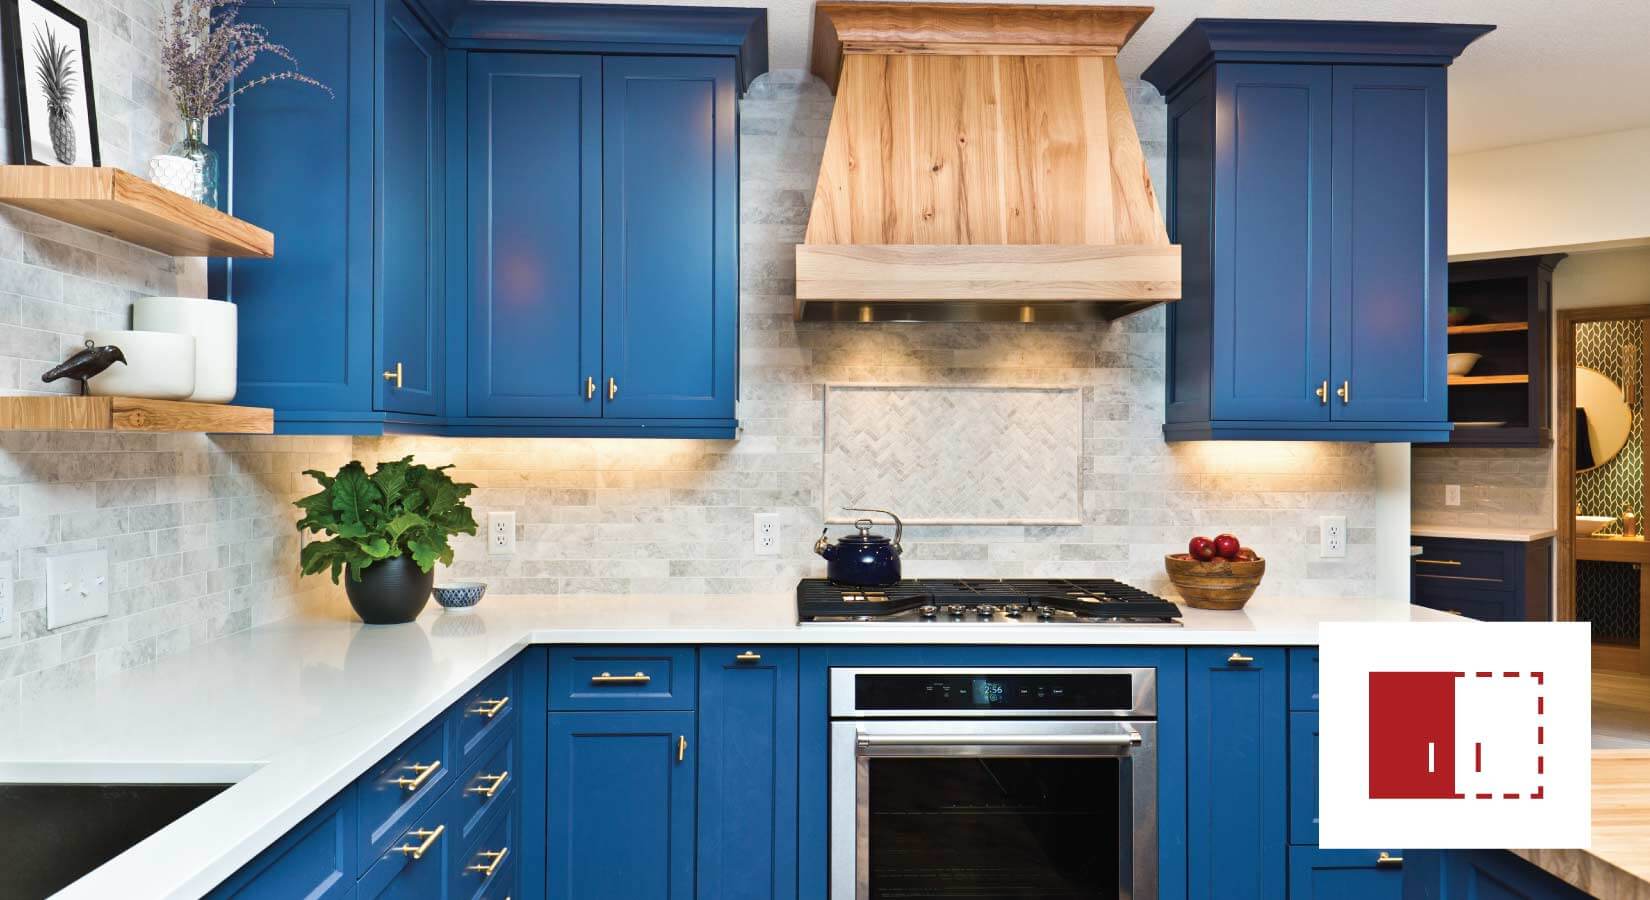 Bright blue semi-custom kitchen cabinets with gold hardware.